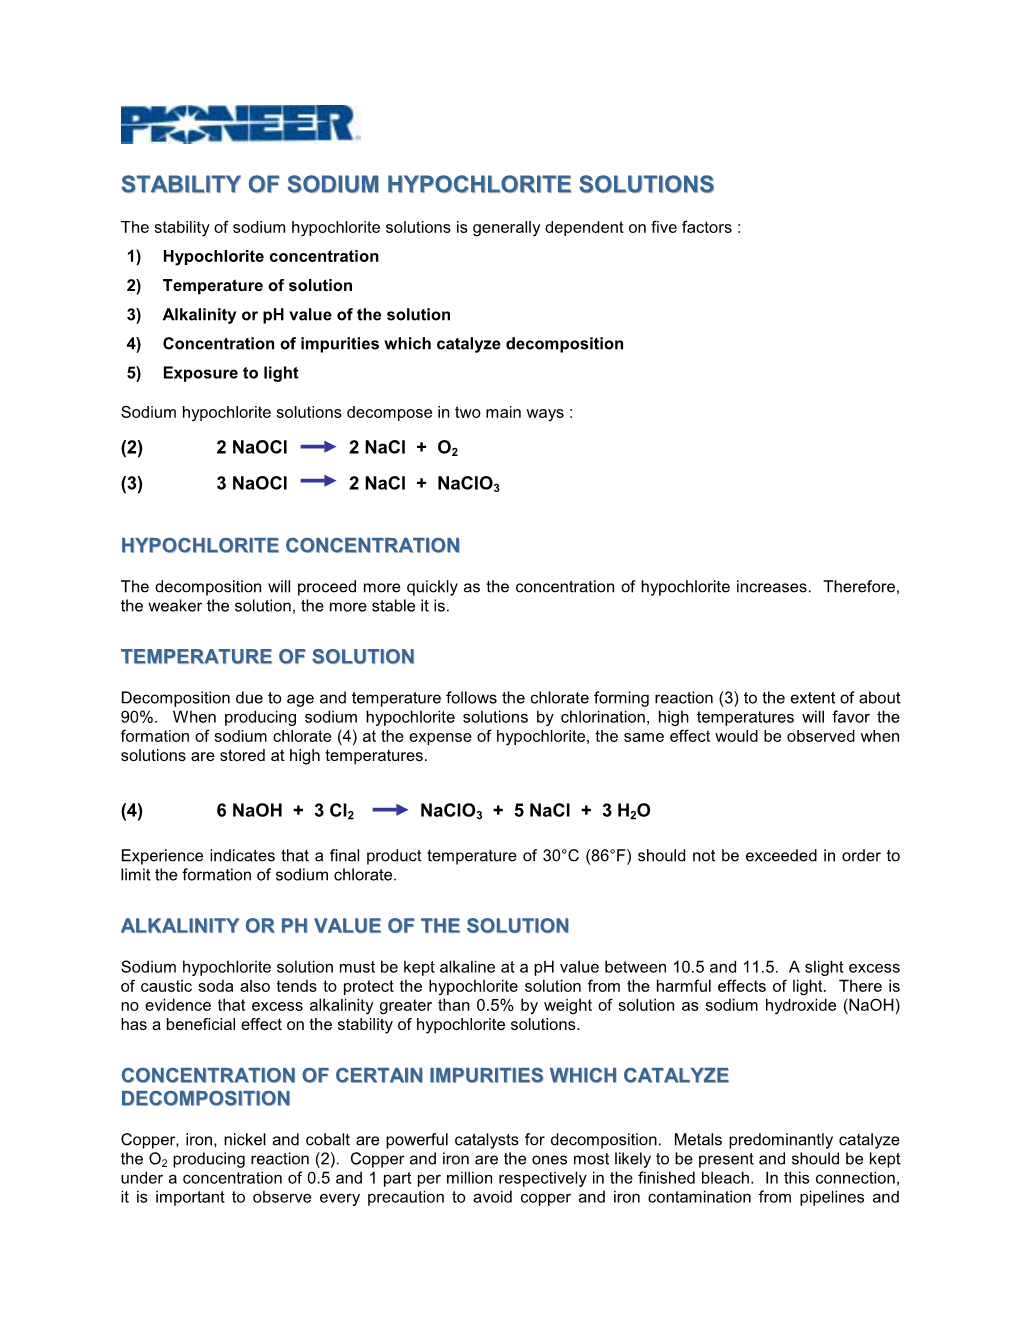 Stability of Sodium Hypochlorite Solutions